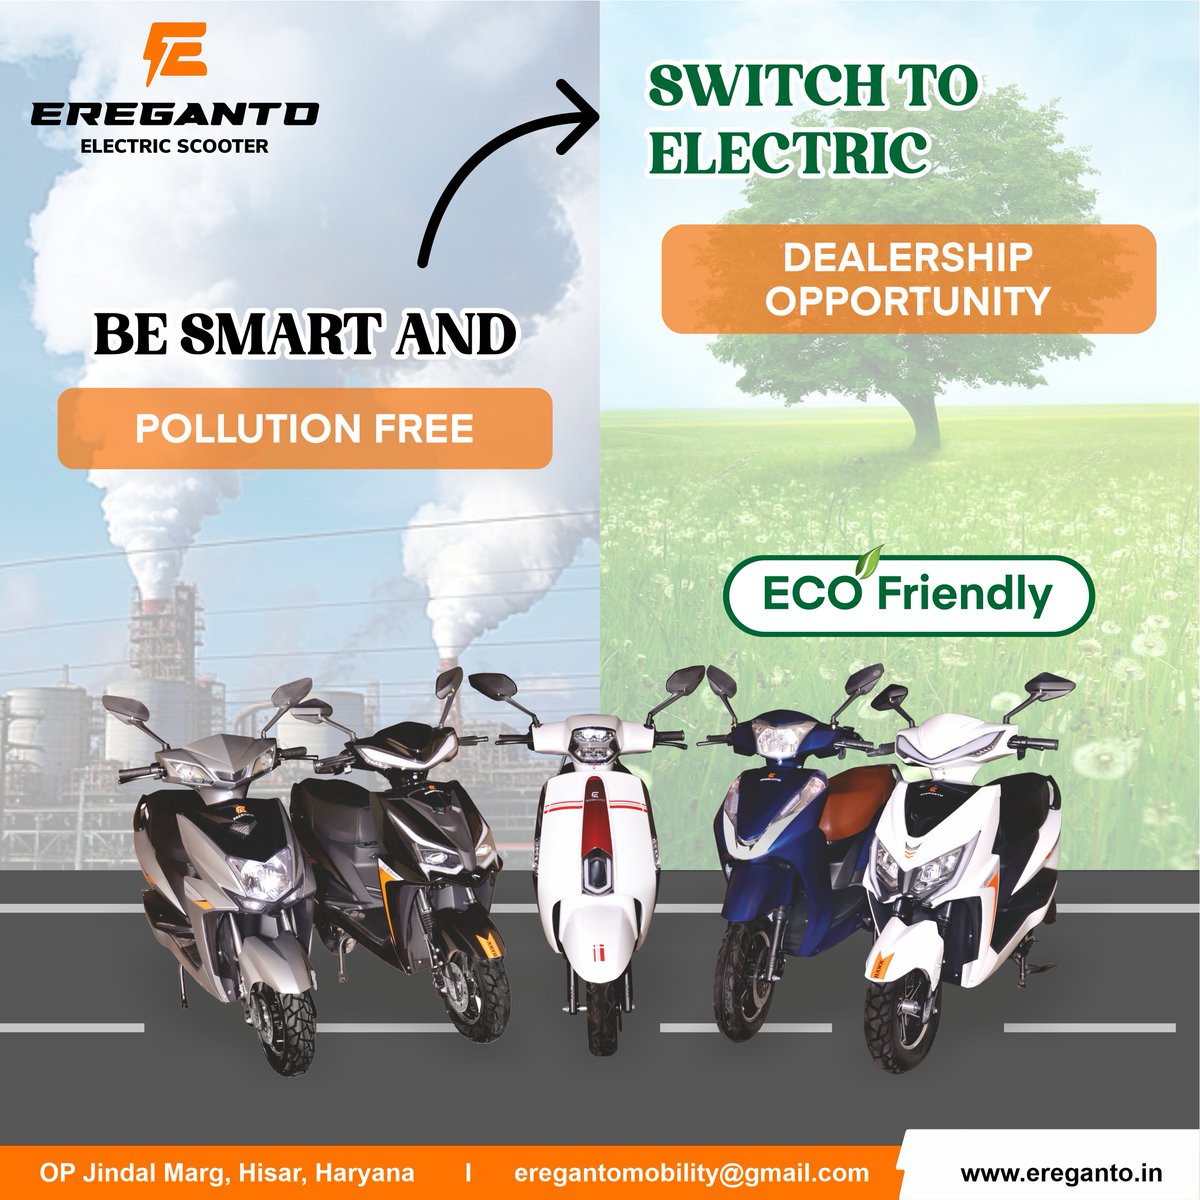 Be Smart and Switch to Electric
Pollution Free
Dealership Opportunity
Ereganto E-Bikes
.
#electric #scooty #scooter #ElectricScooty #electricscooters #goelectric #TheFutureIsElectric #PowertheChange #BestEScooterInIndia #MakeTheSmartMove #ElectricIsTheFuture #SwitchToElectric